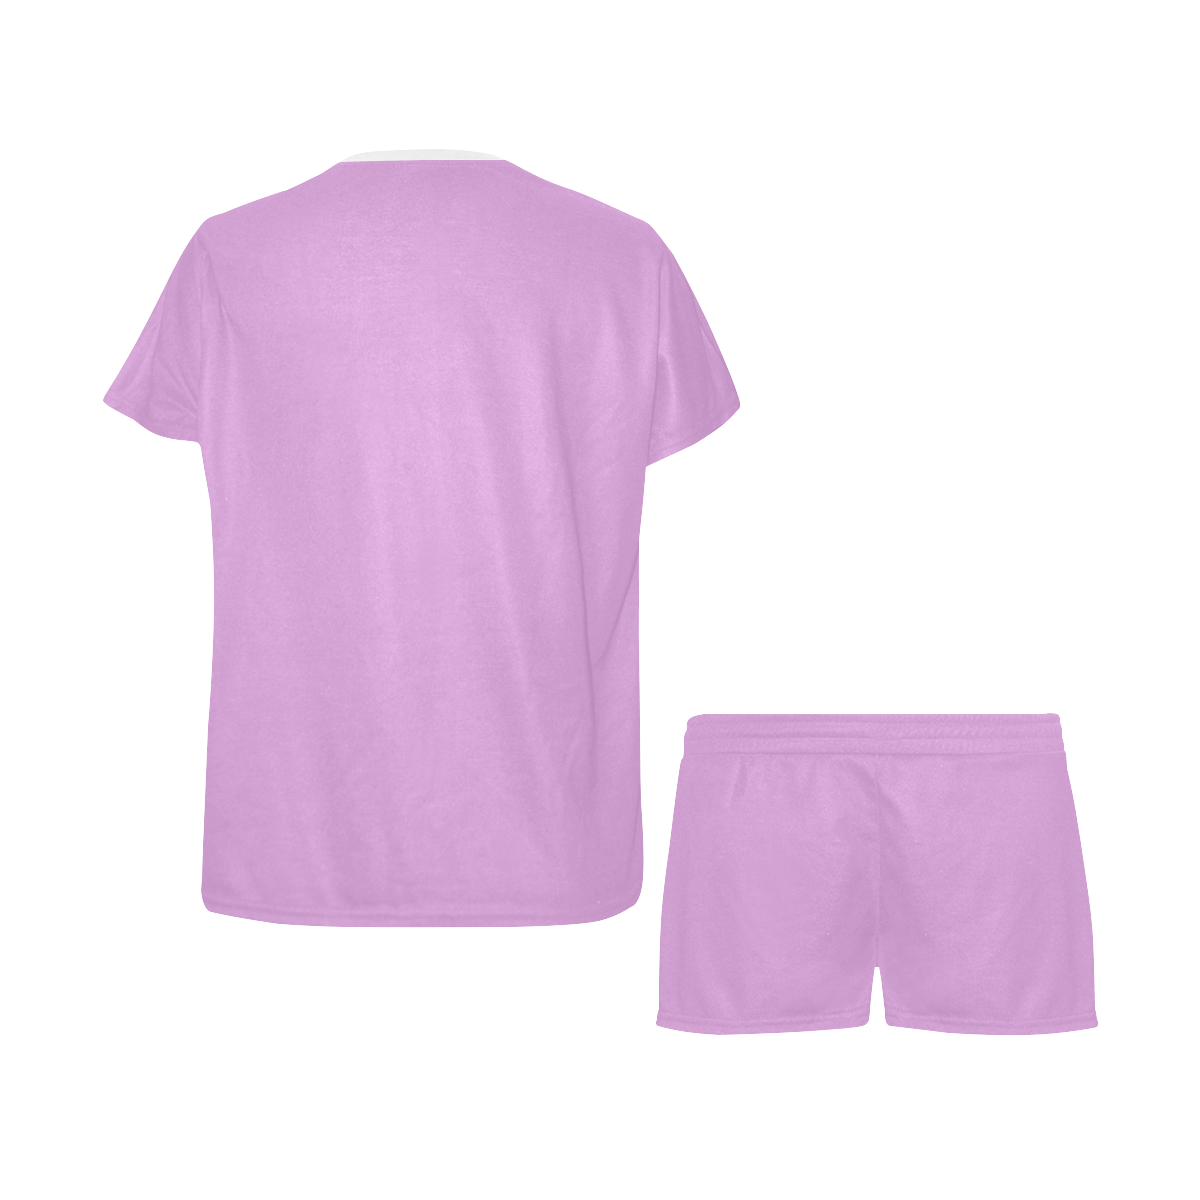 color plum Women's Short Pajama Set